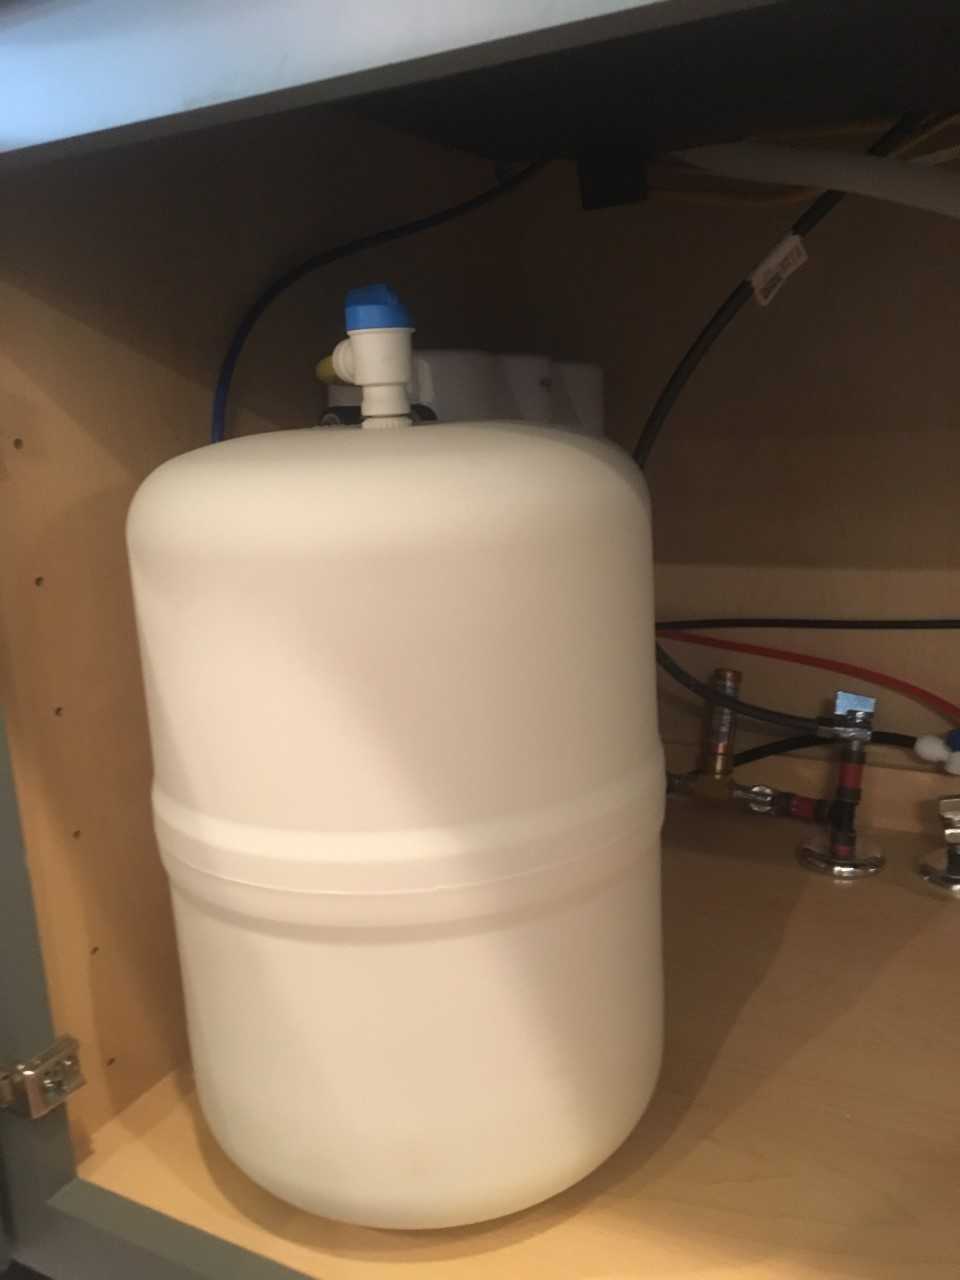 Hunstville alabama
water filter
reverse osmosis